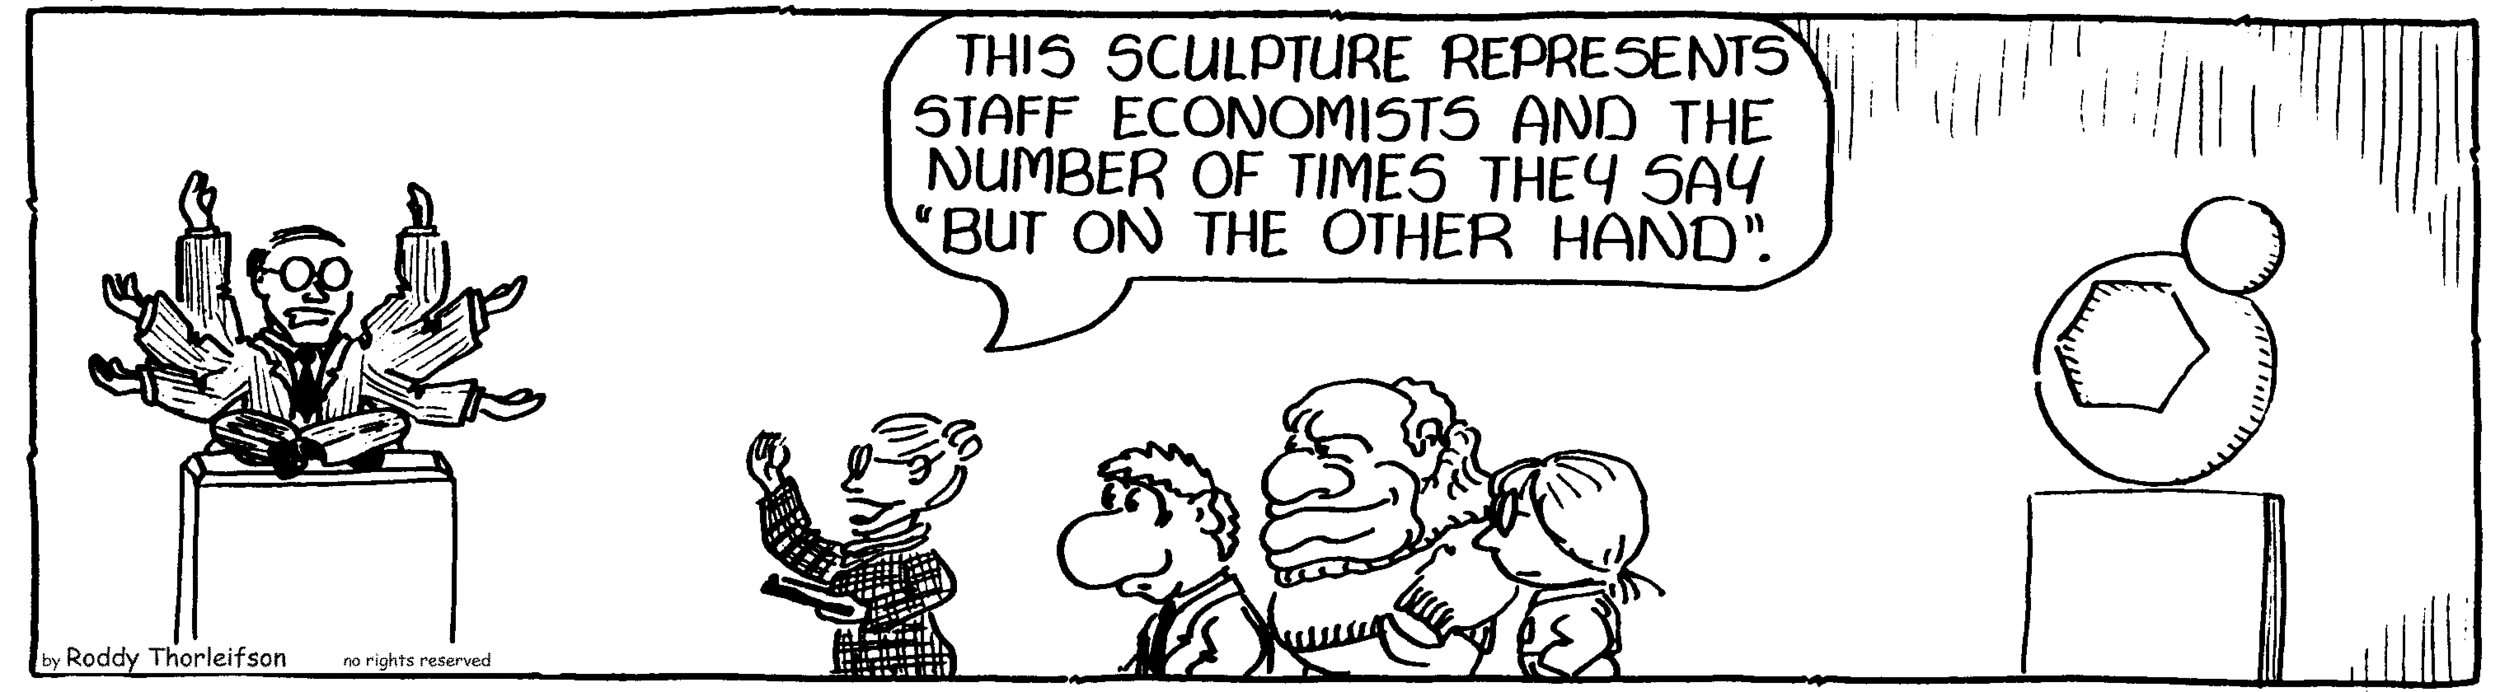 free cartoon economy economic economist and on the other hand